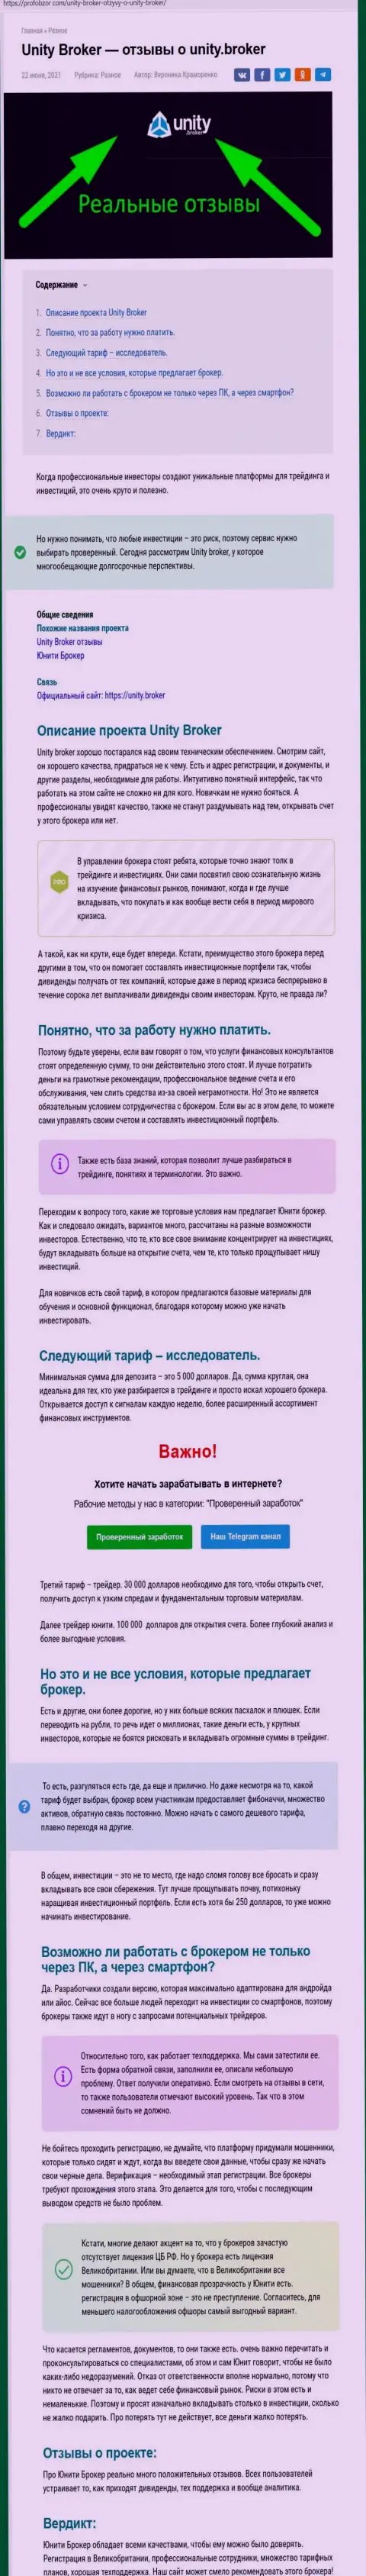 Разбор форекс-дилингового центра УнитиБрокер на онлайн-площадке ПрофОбзор Ком